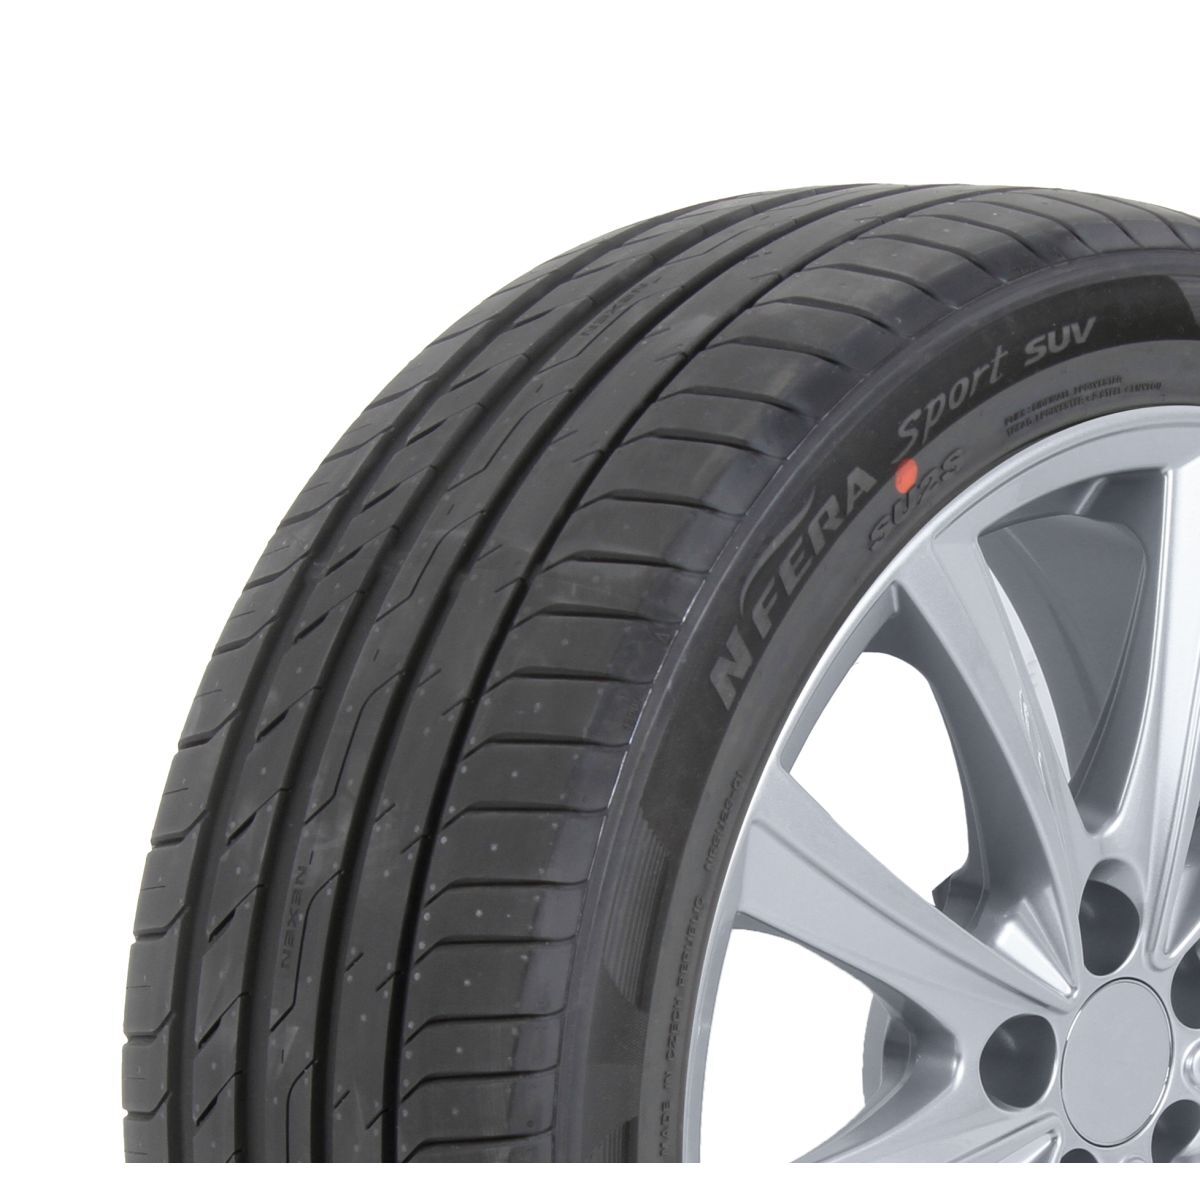 Neumáticos de verano NEXEN NFera Sport SUV 215/60R17 96H